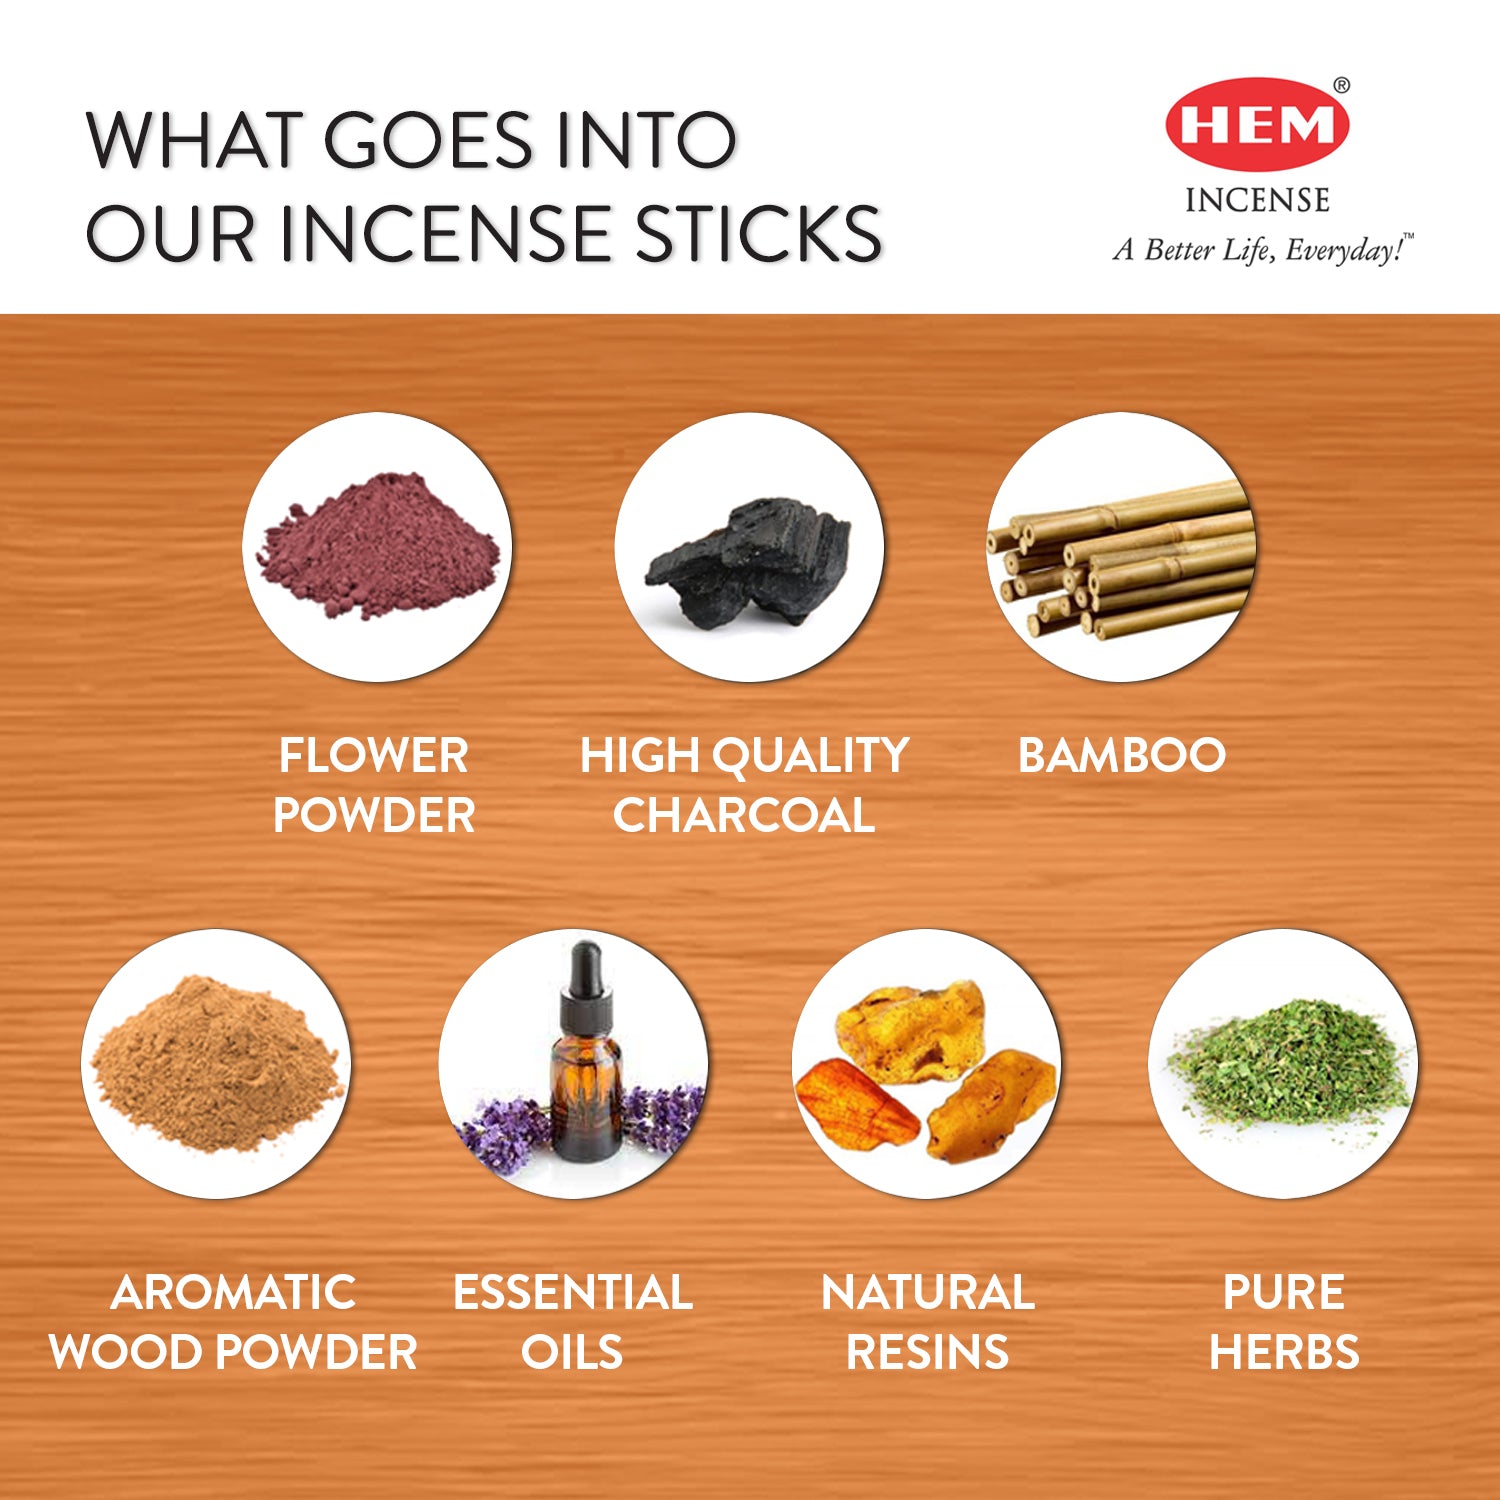 cedar-incense-sticks-ingredients